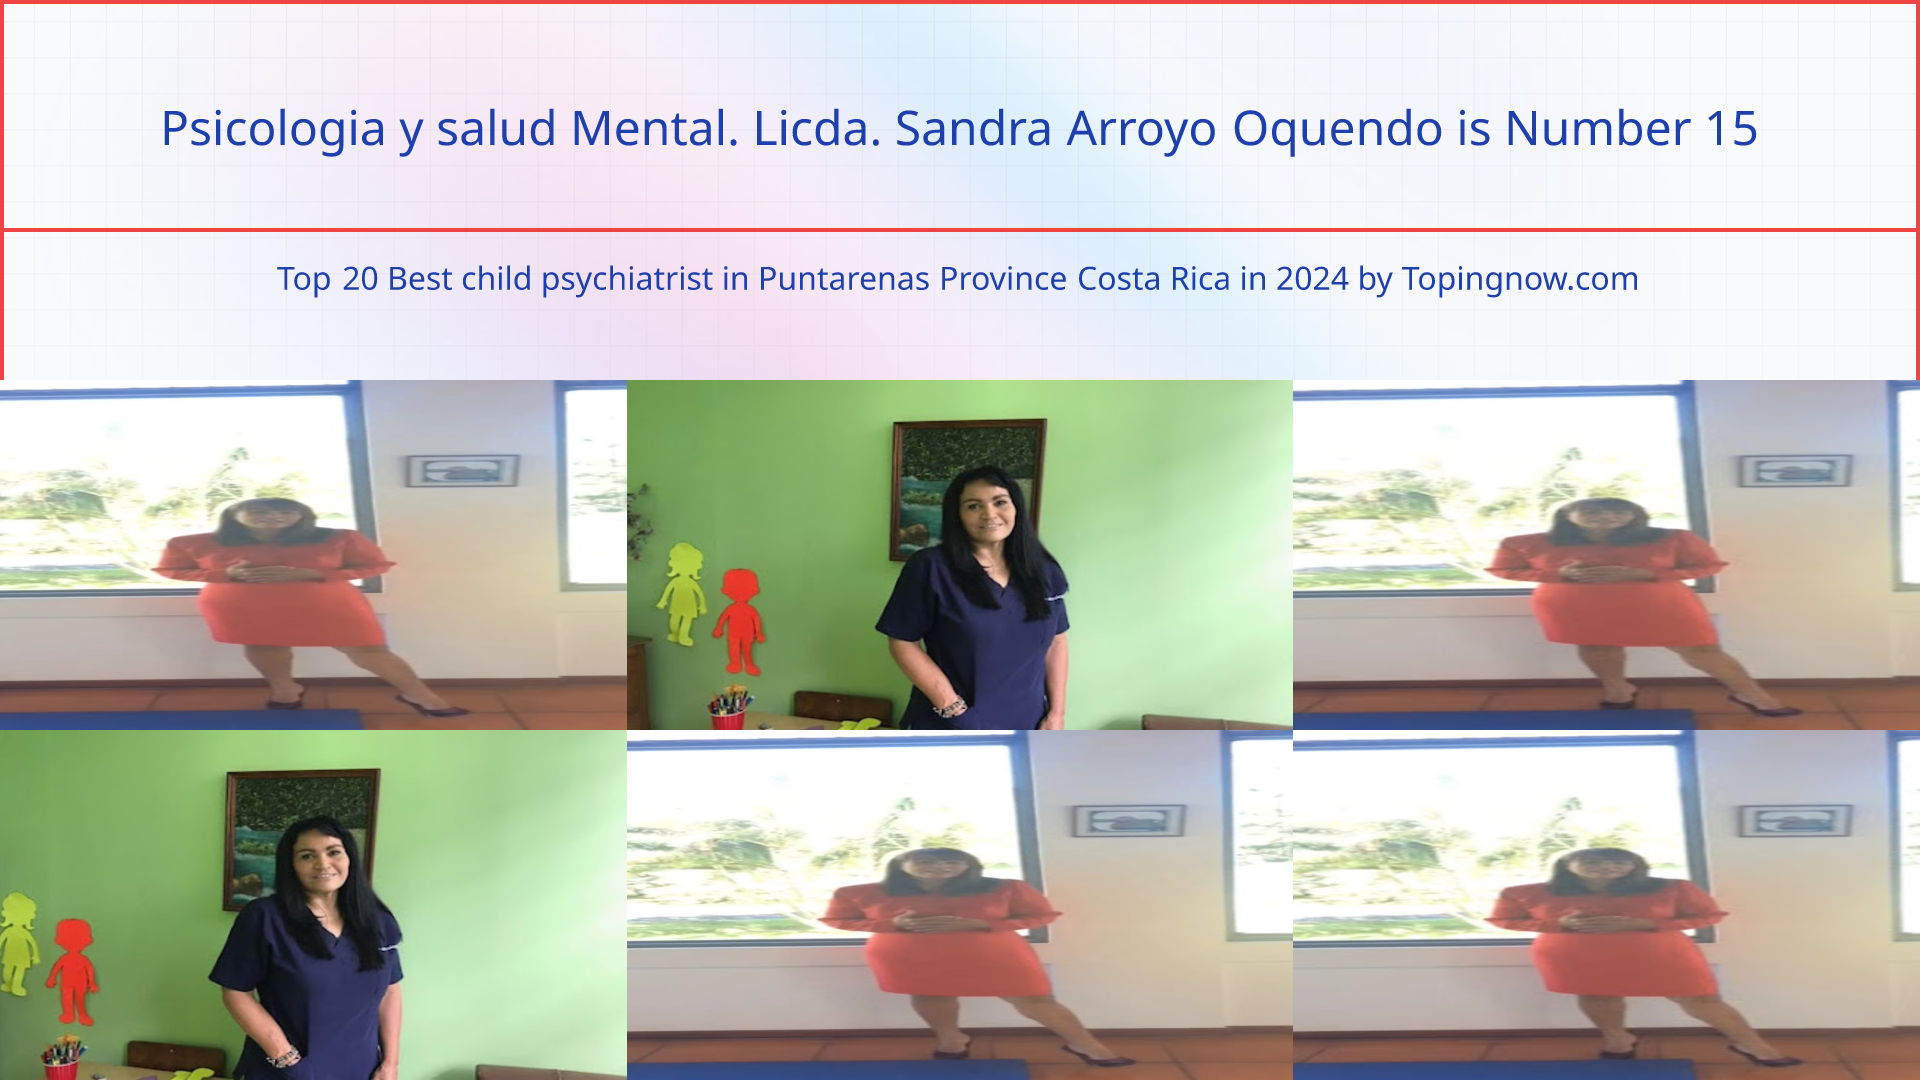 Psicologia y salud Mental. Licda. Sandra Arroyo Oquendo: Top 20 Best child psychiatrist in Puntarenas Province Costa Rica in 2024